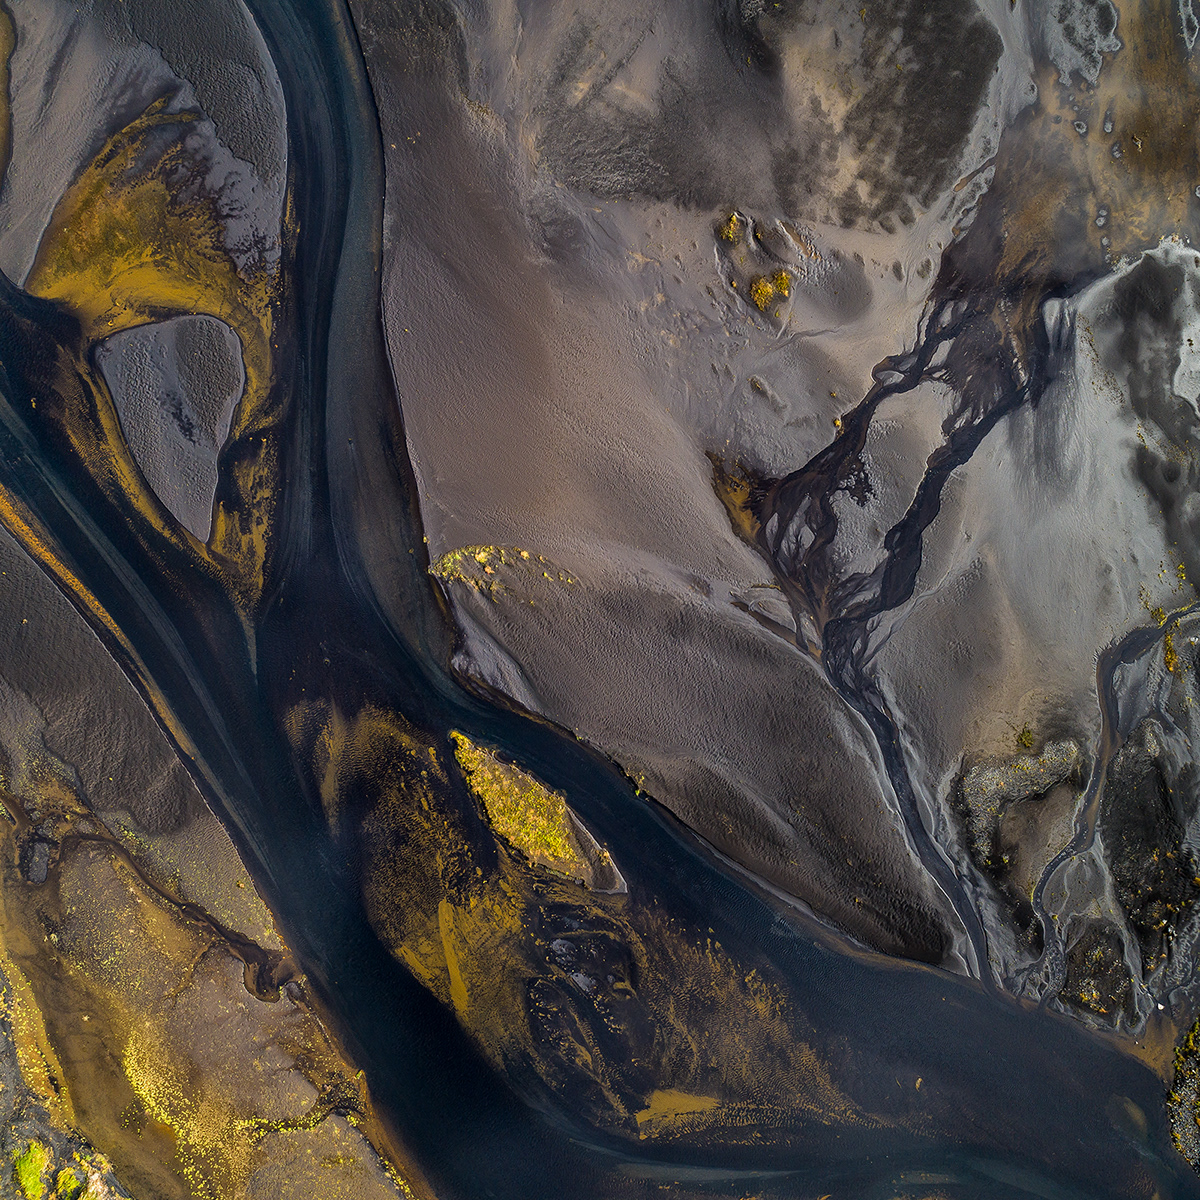 milan-radisics-photography-fluvial-alluvial-landscape-art-photo-03.jpg